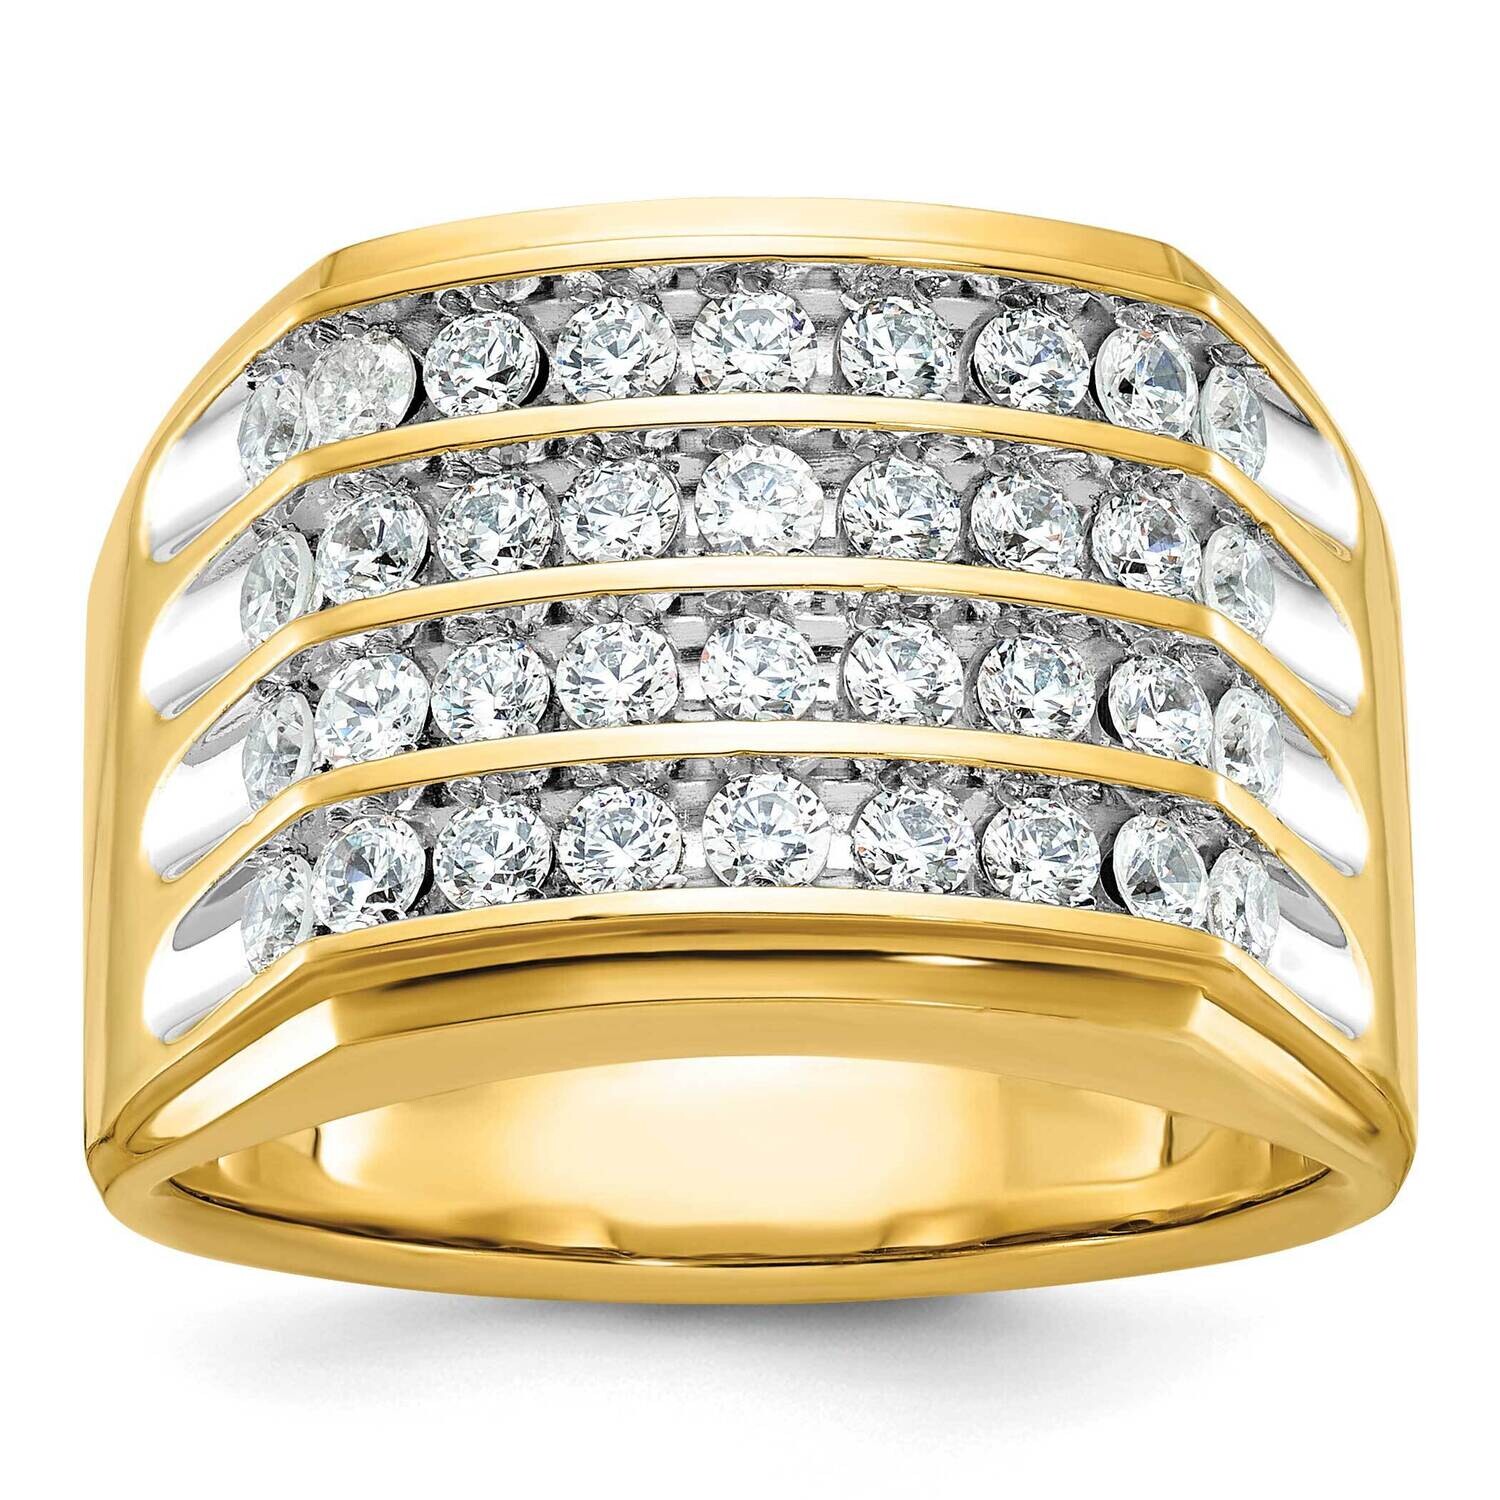 Ibgoodman Men's Polished Grooved 4-Row 1 1/5 Carat Aa Quality Diamond Ring 14k Gold White Rhodium B59287-4YAA